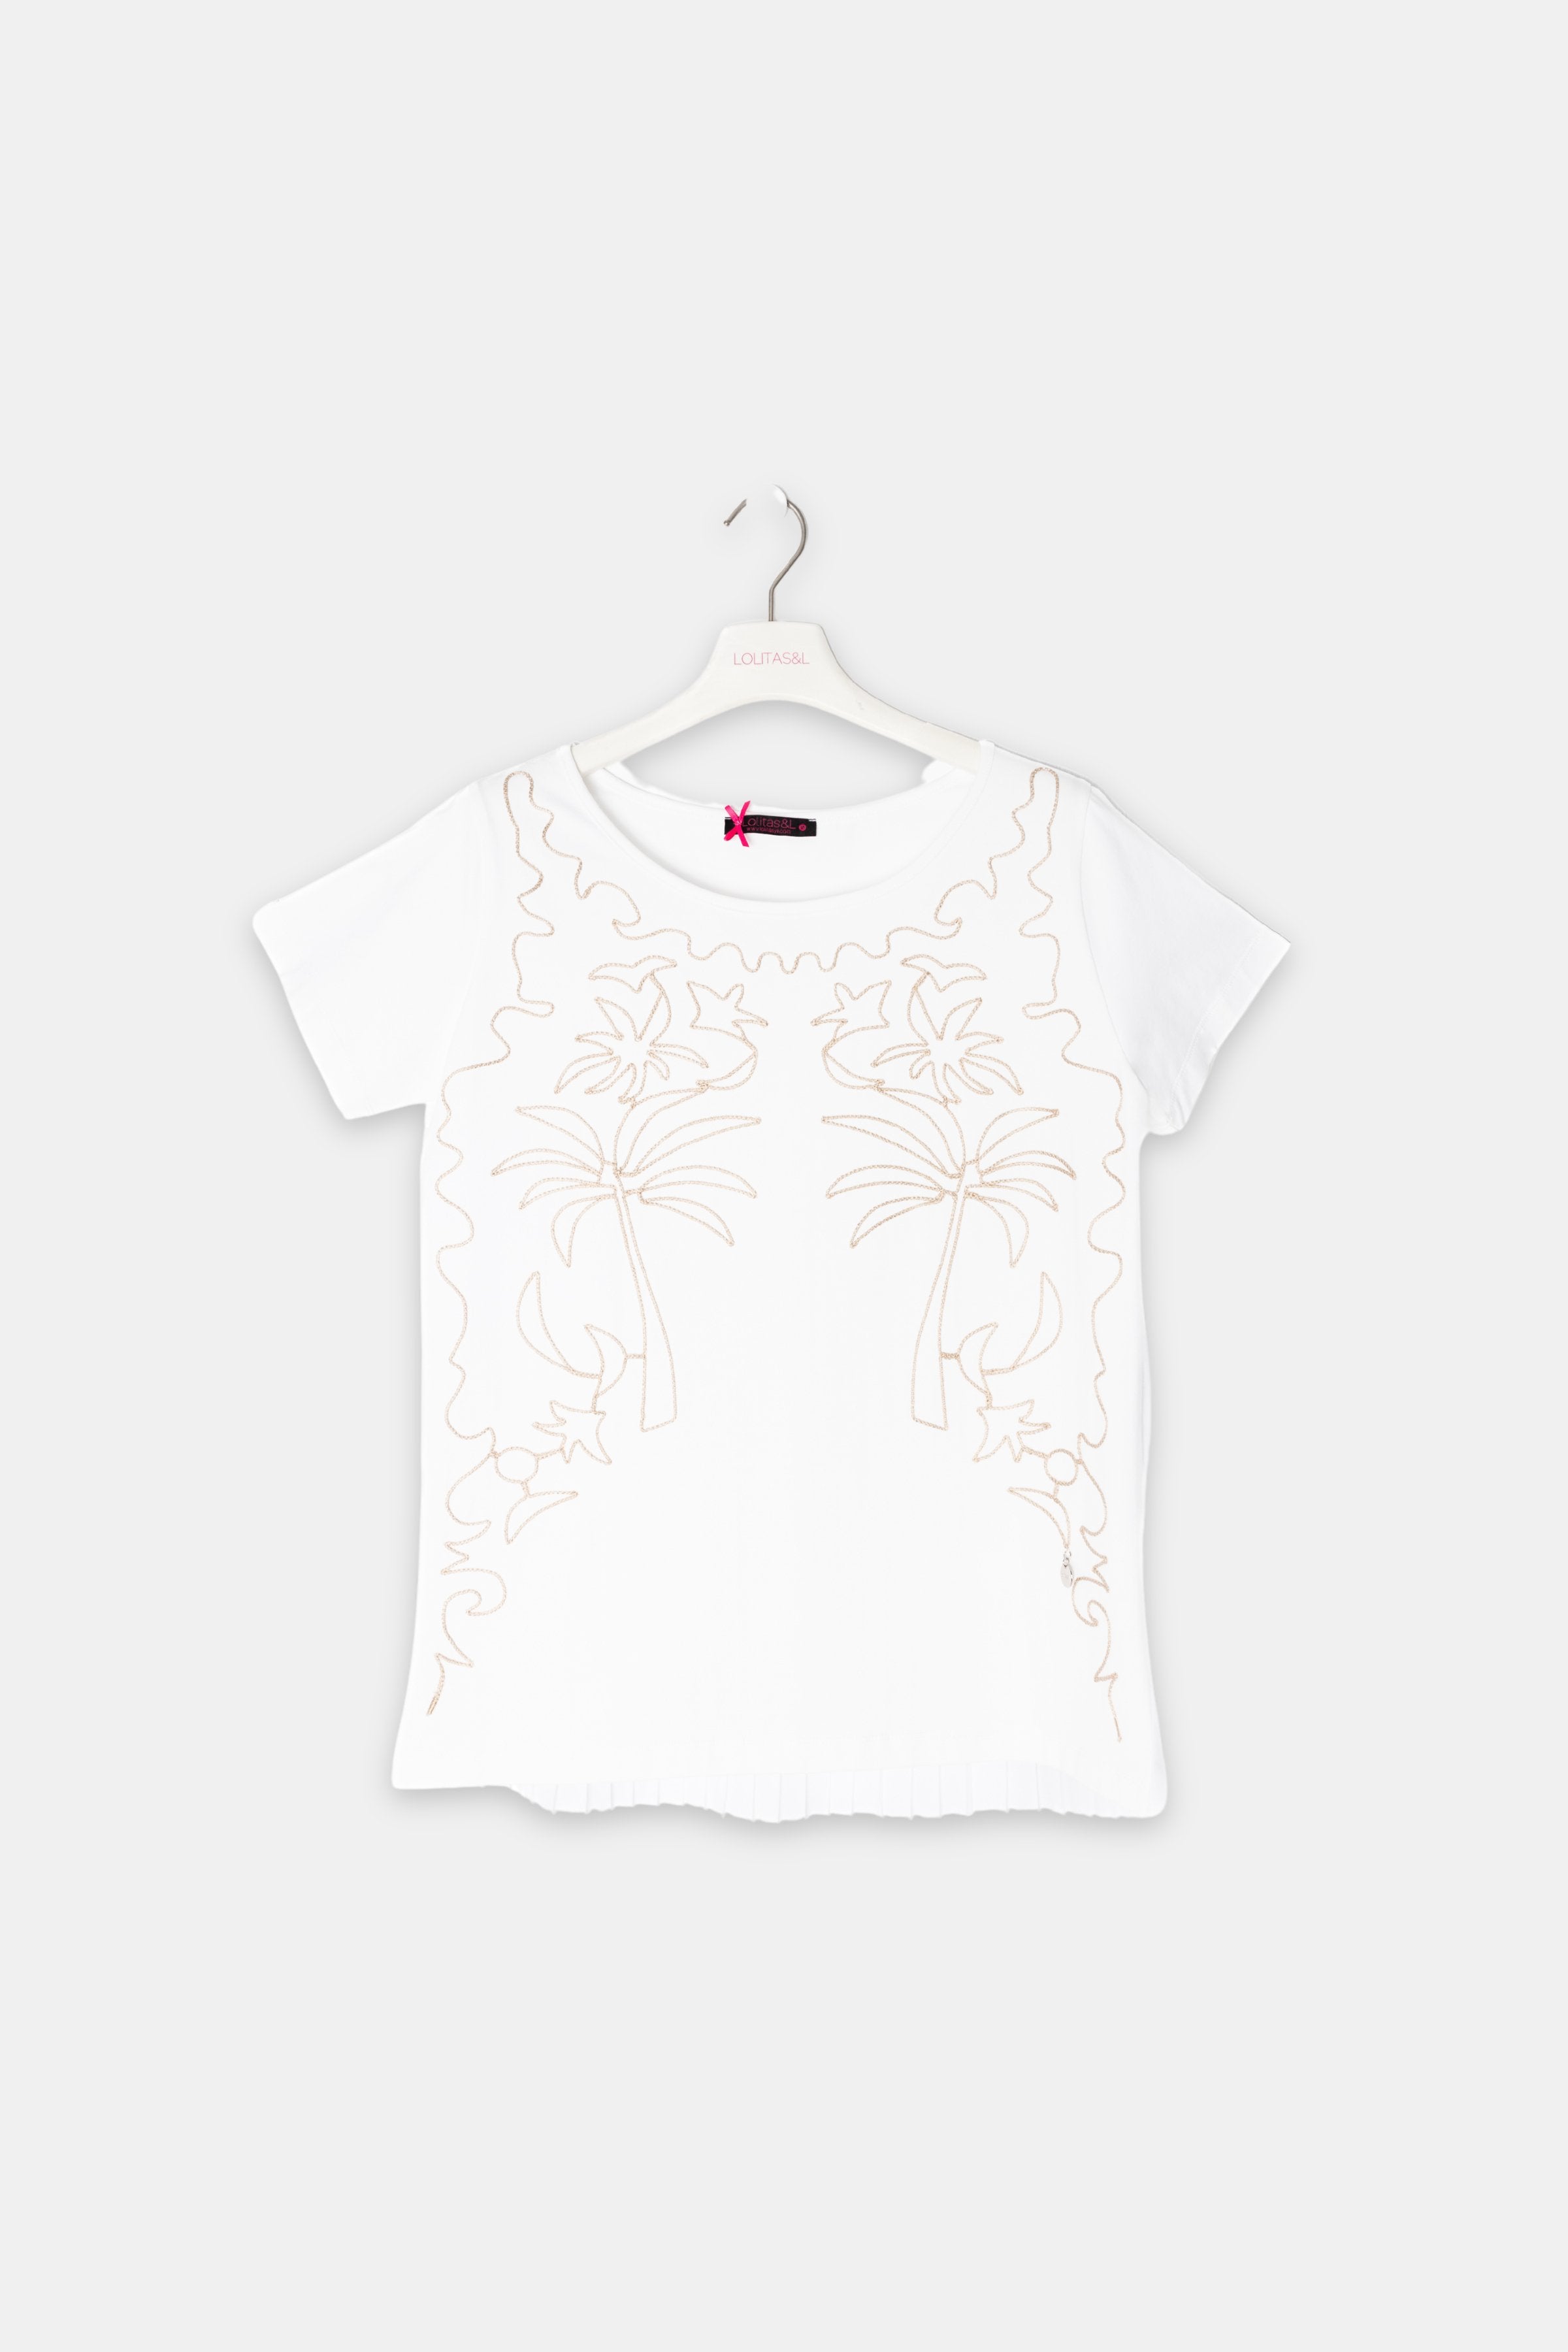 Camiseta blanca bordado oasis beige LolitasyL - lolitasyl.com